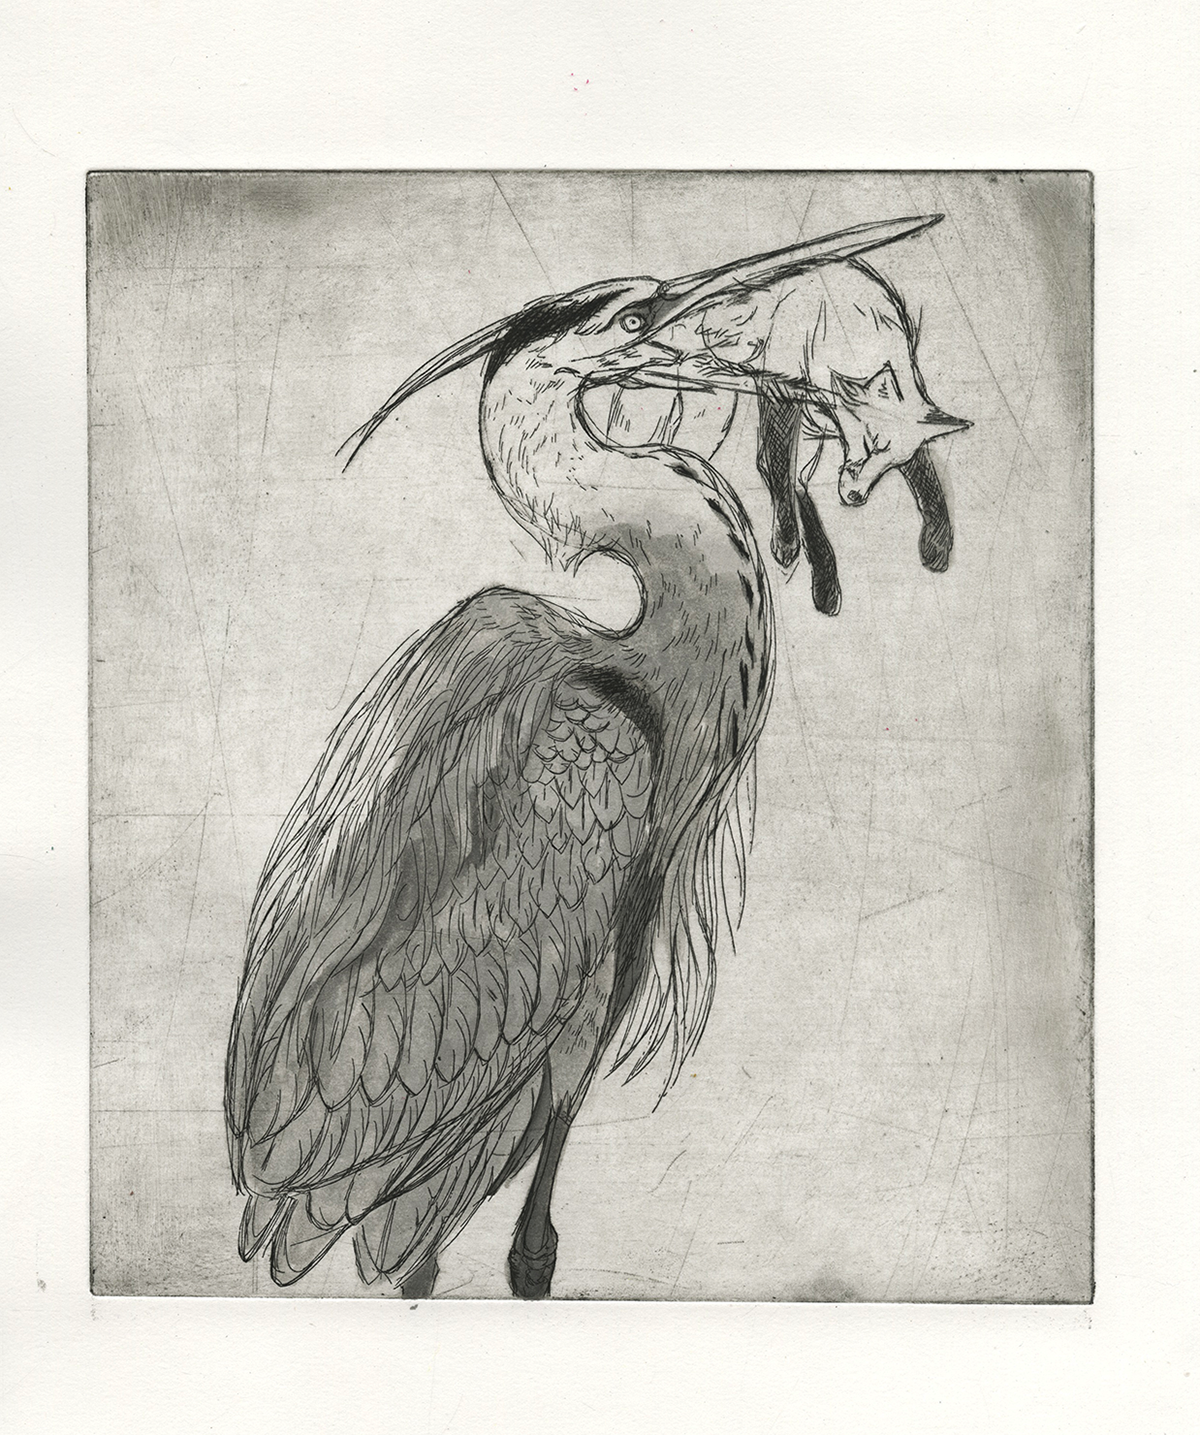 prints printmaking birds owls egrets chickens Patterns dramatic surreal deer